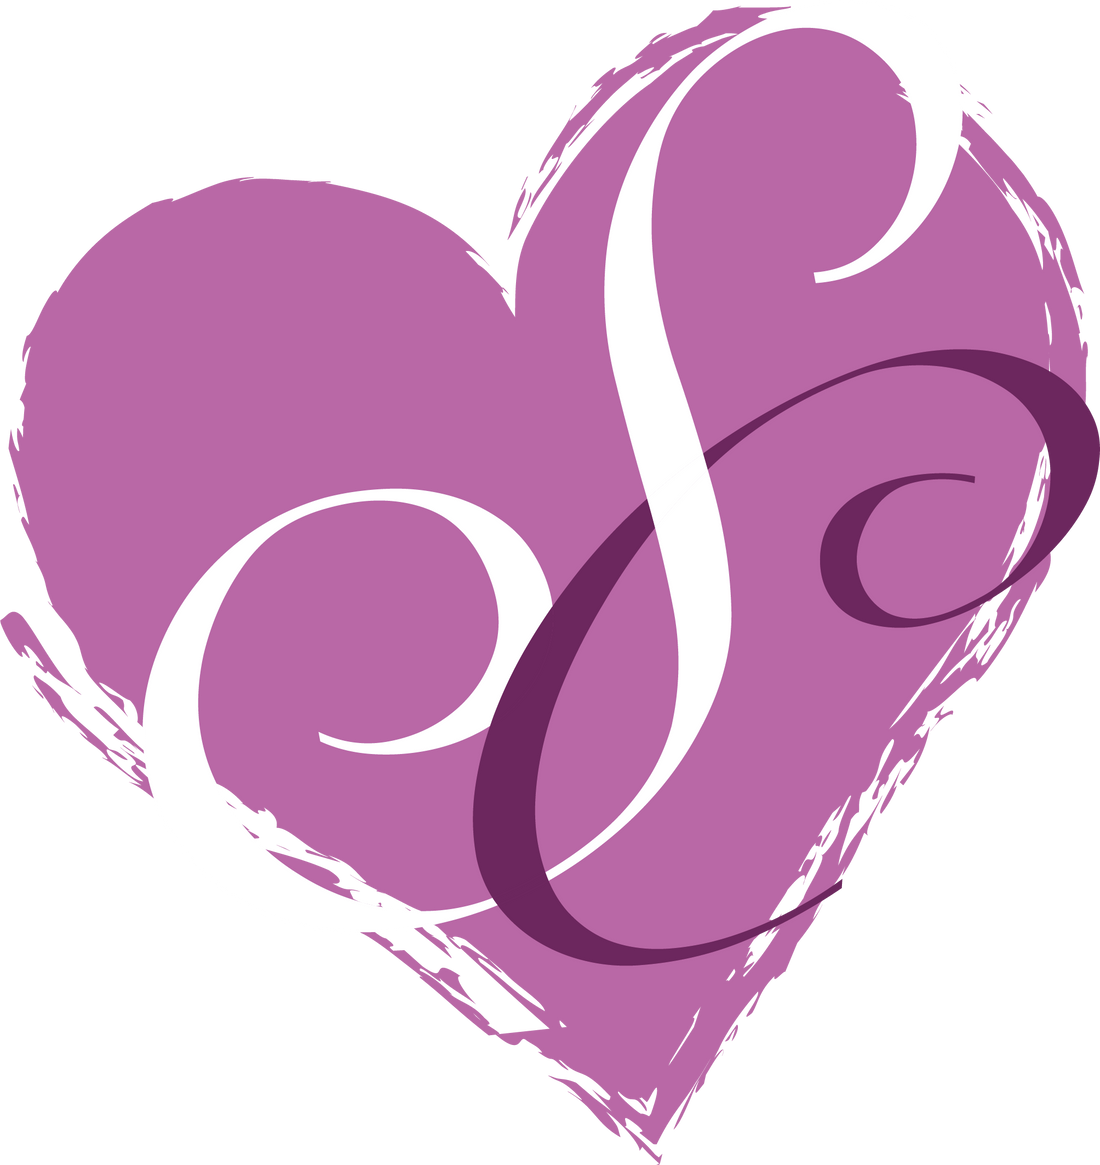 Purple heart logo for ethically made fashion, organic sleepwear womens and luxury women's sleepwear brand